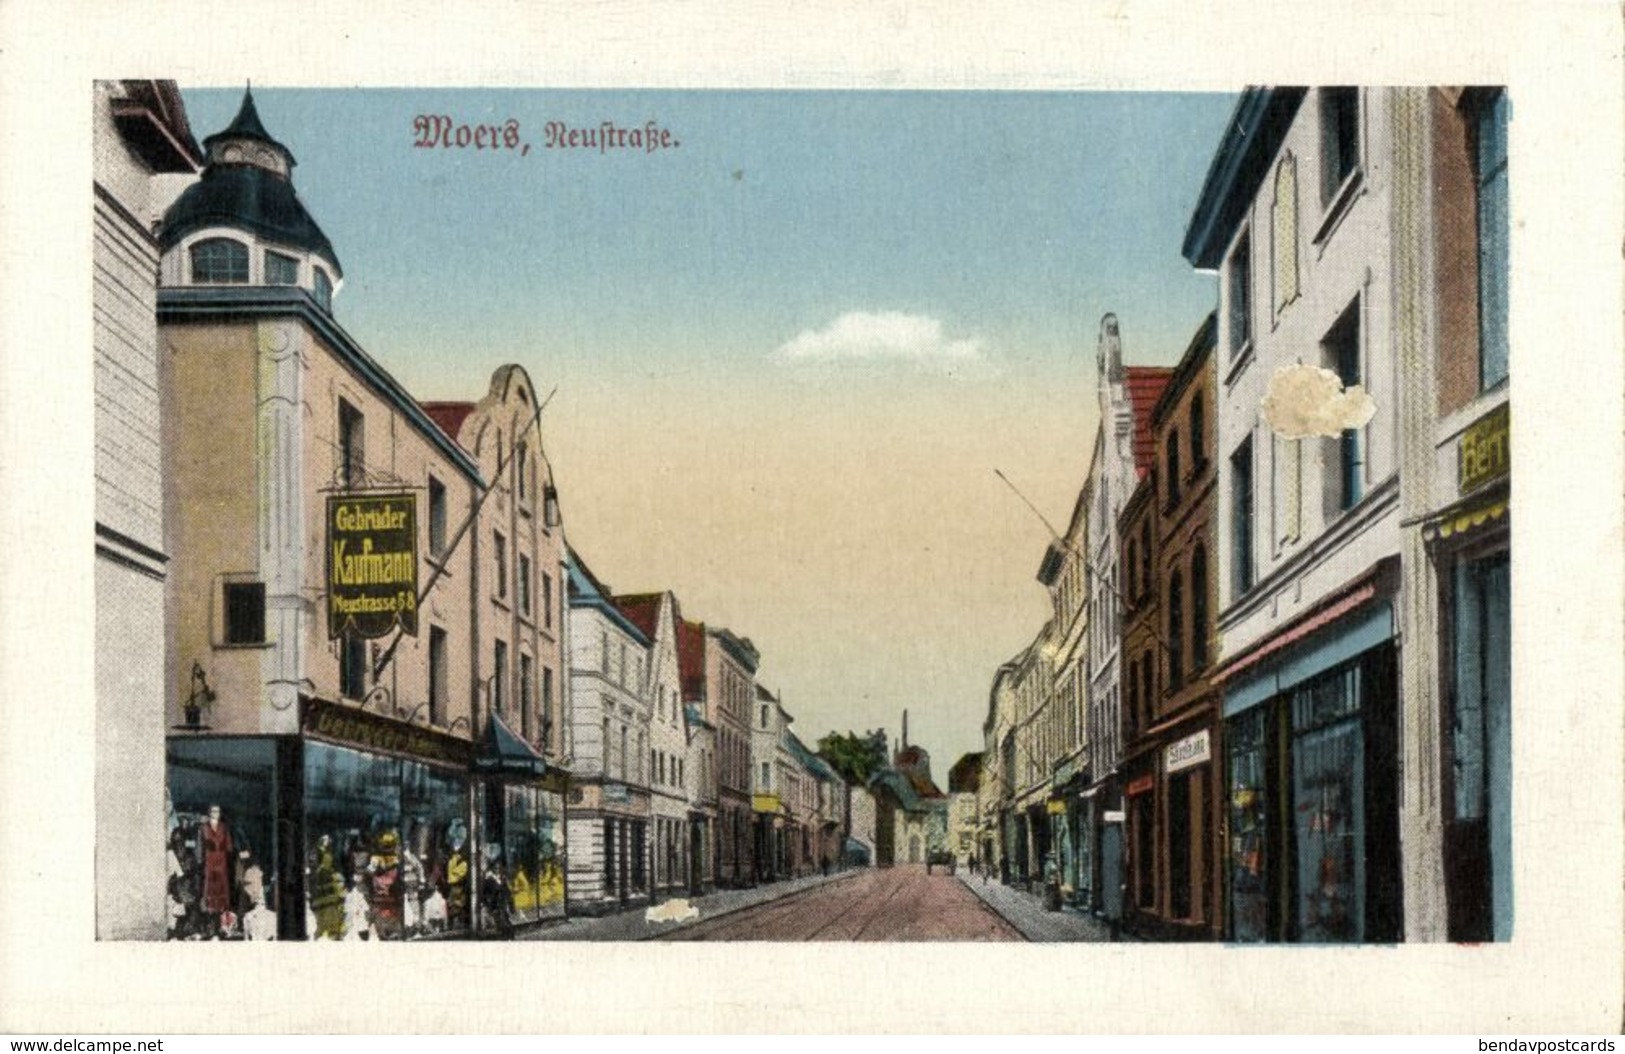 MOERS Am Rhein, Neustrasse, Gebrüder Kaufmann (1920s) AK (2) - Moers